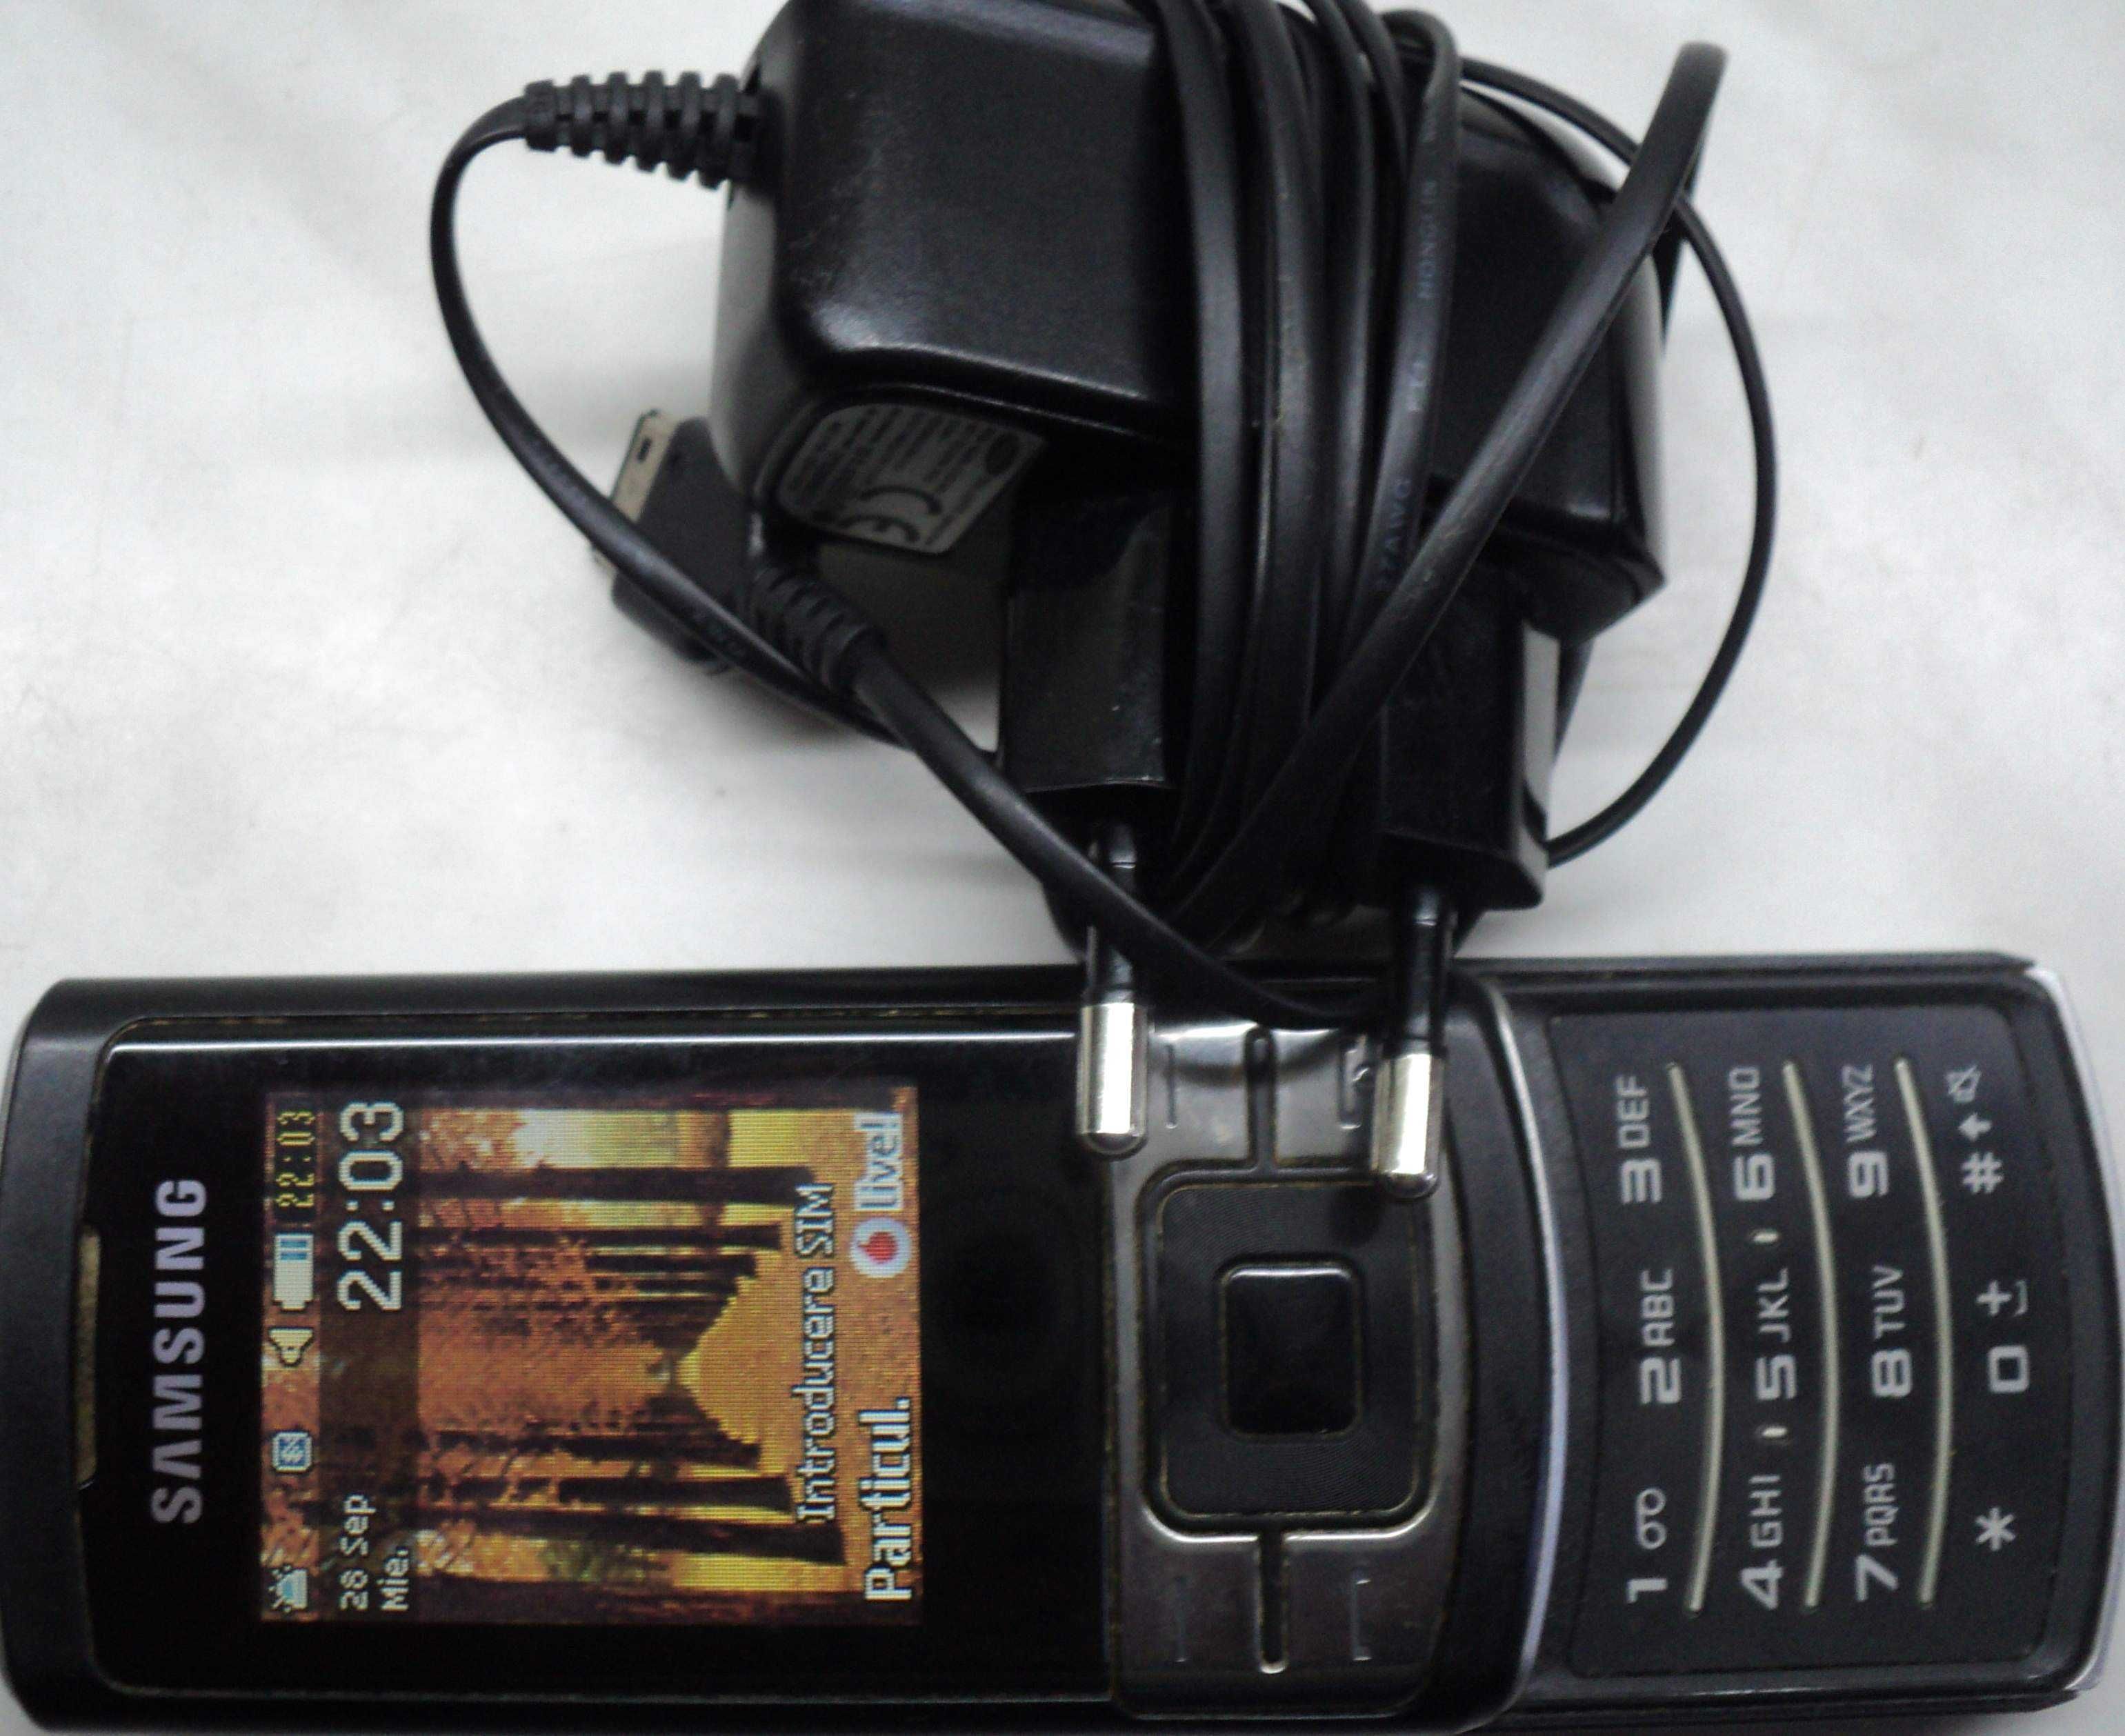 Telefon clasic Samsung Slide C050 (de colectie)